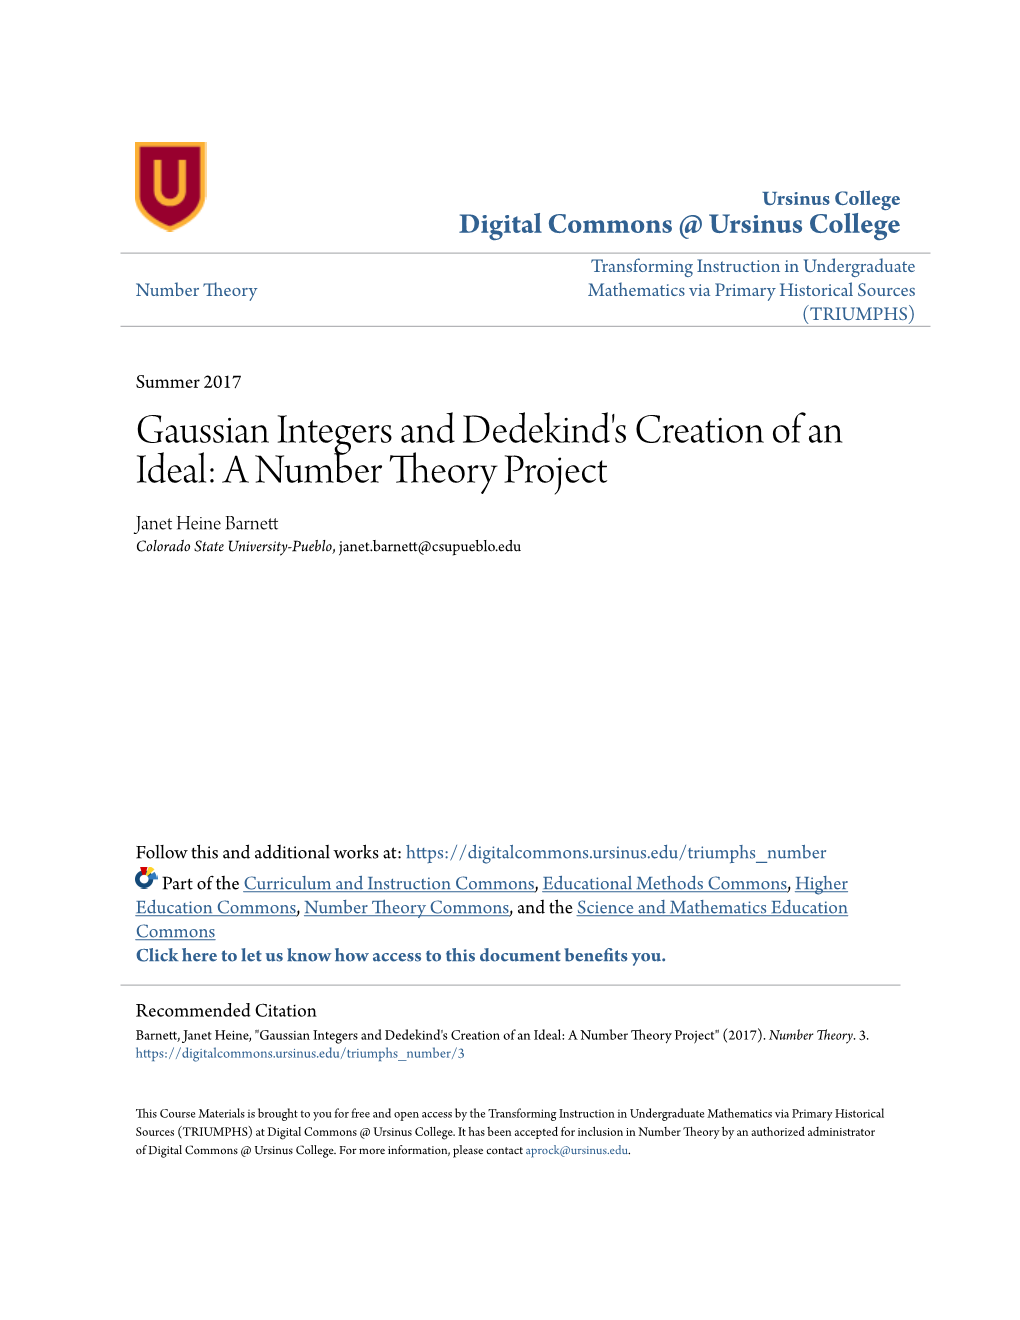 Gaussian Integers and Dedekind's Creation of an Ideal: a Number Theory Project Janet Heine Barnett Colorado State University-Pueblo, Janet.Barnett@Csupueblo.Edu